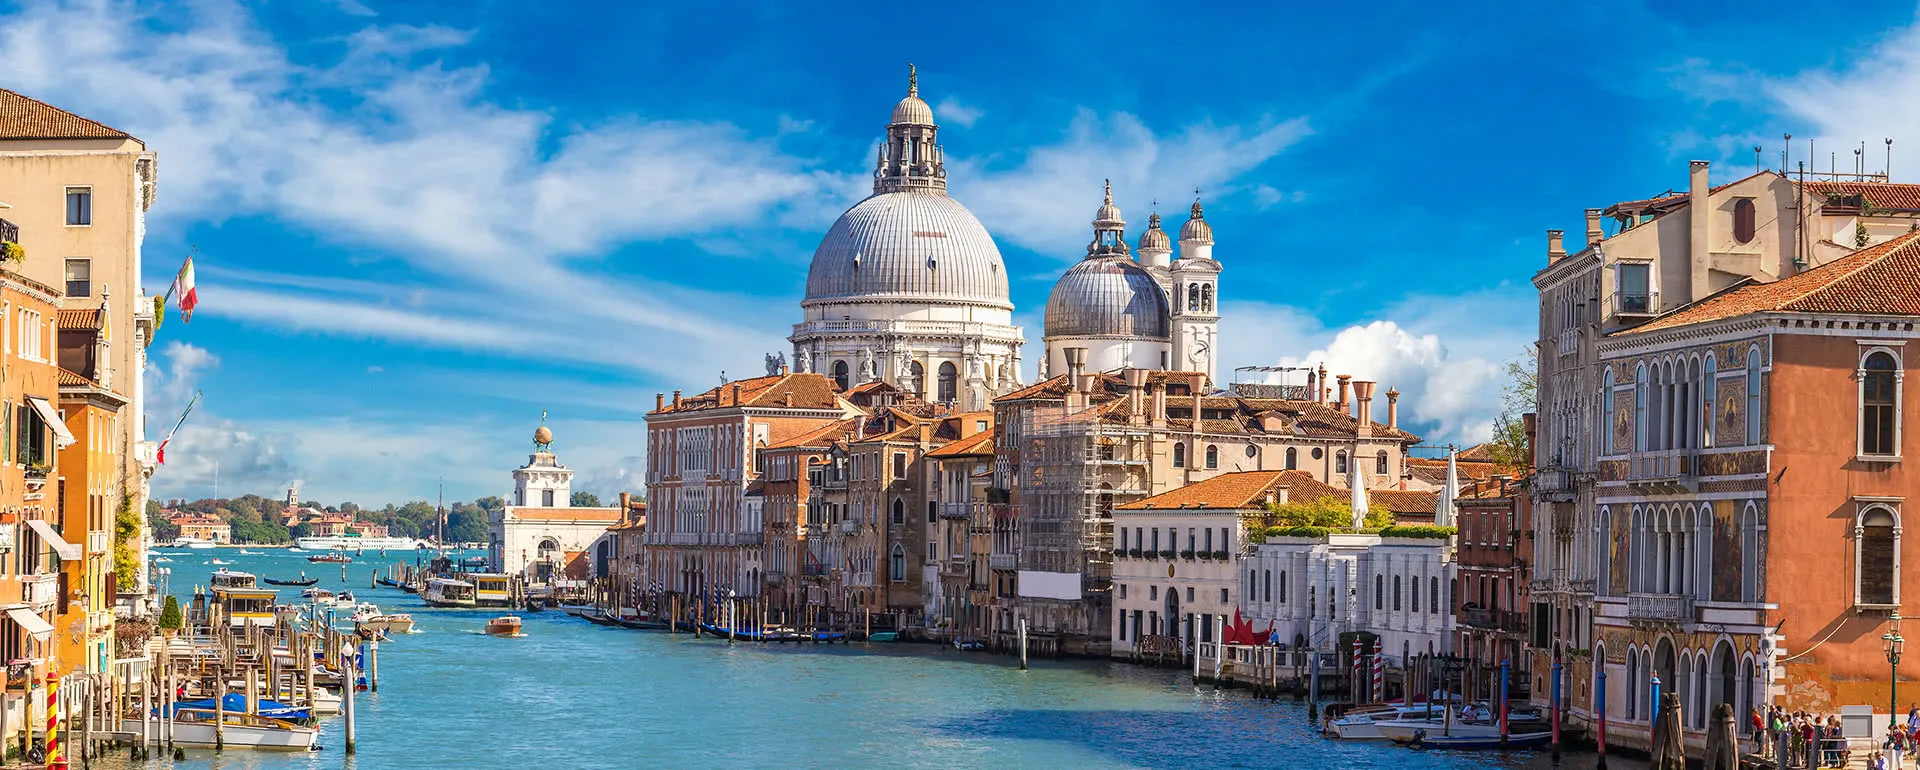 Venedig Panorama Bild